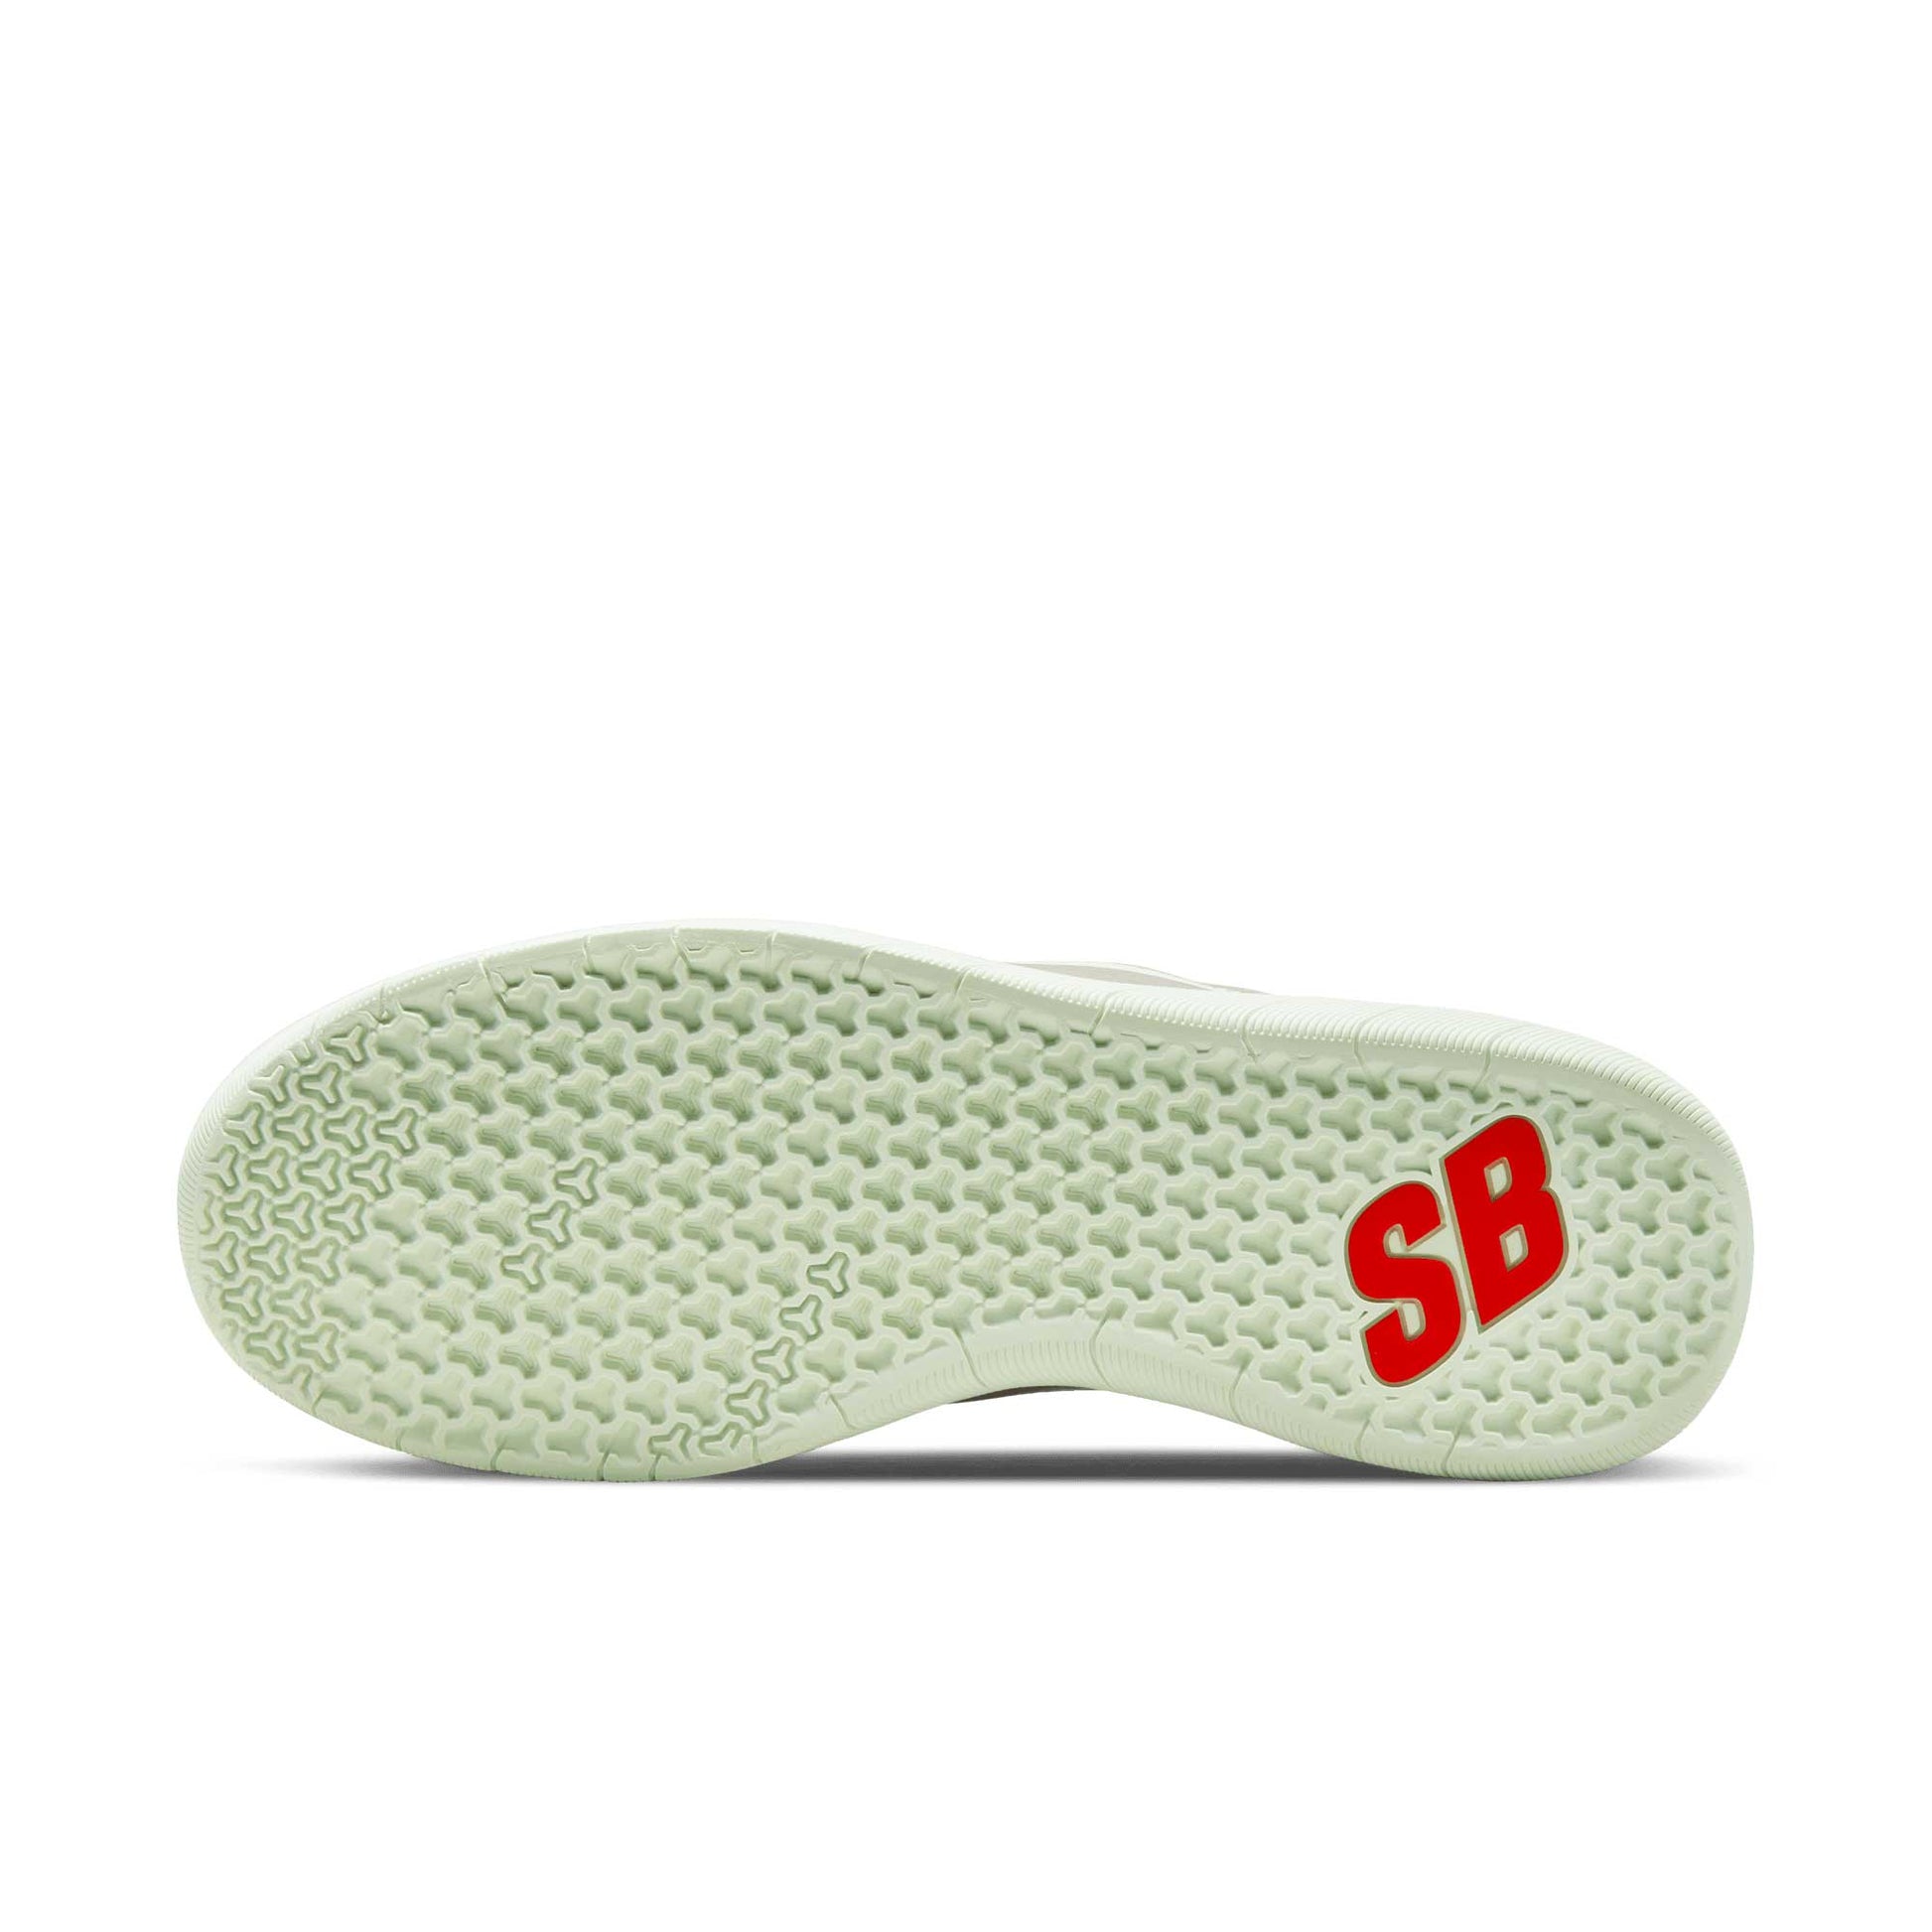 Nike SB Nyjah Free 2 Premium, white/white-barely green-habanero red - Tiki Room Skateboards - 9